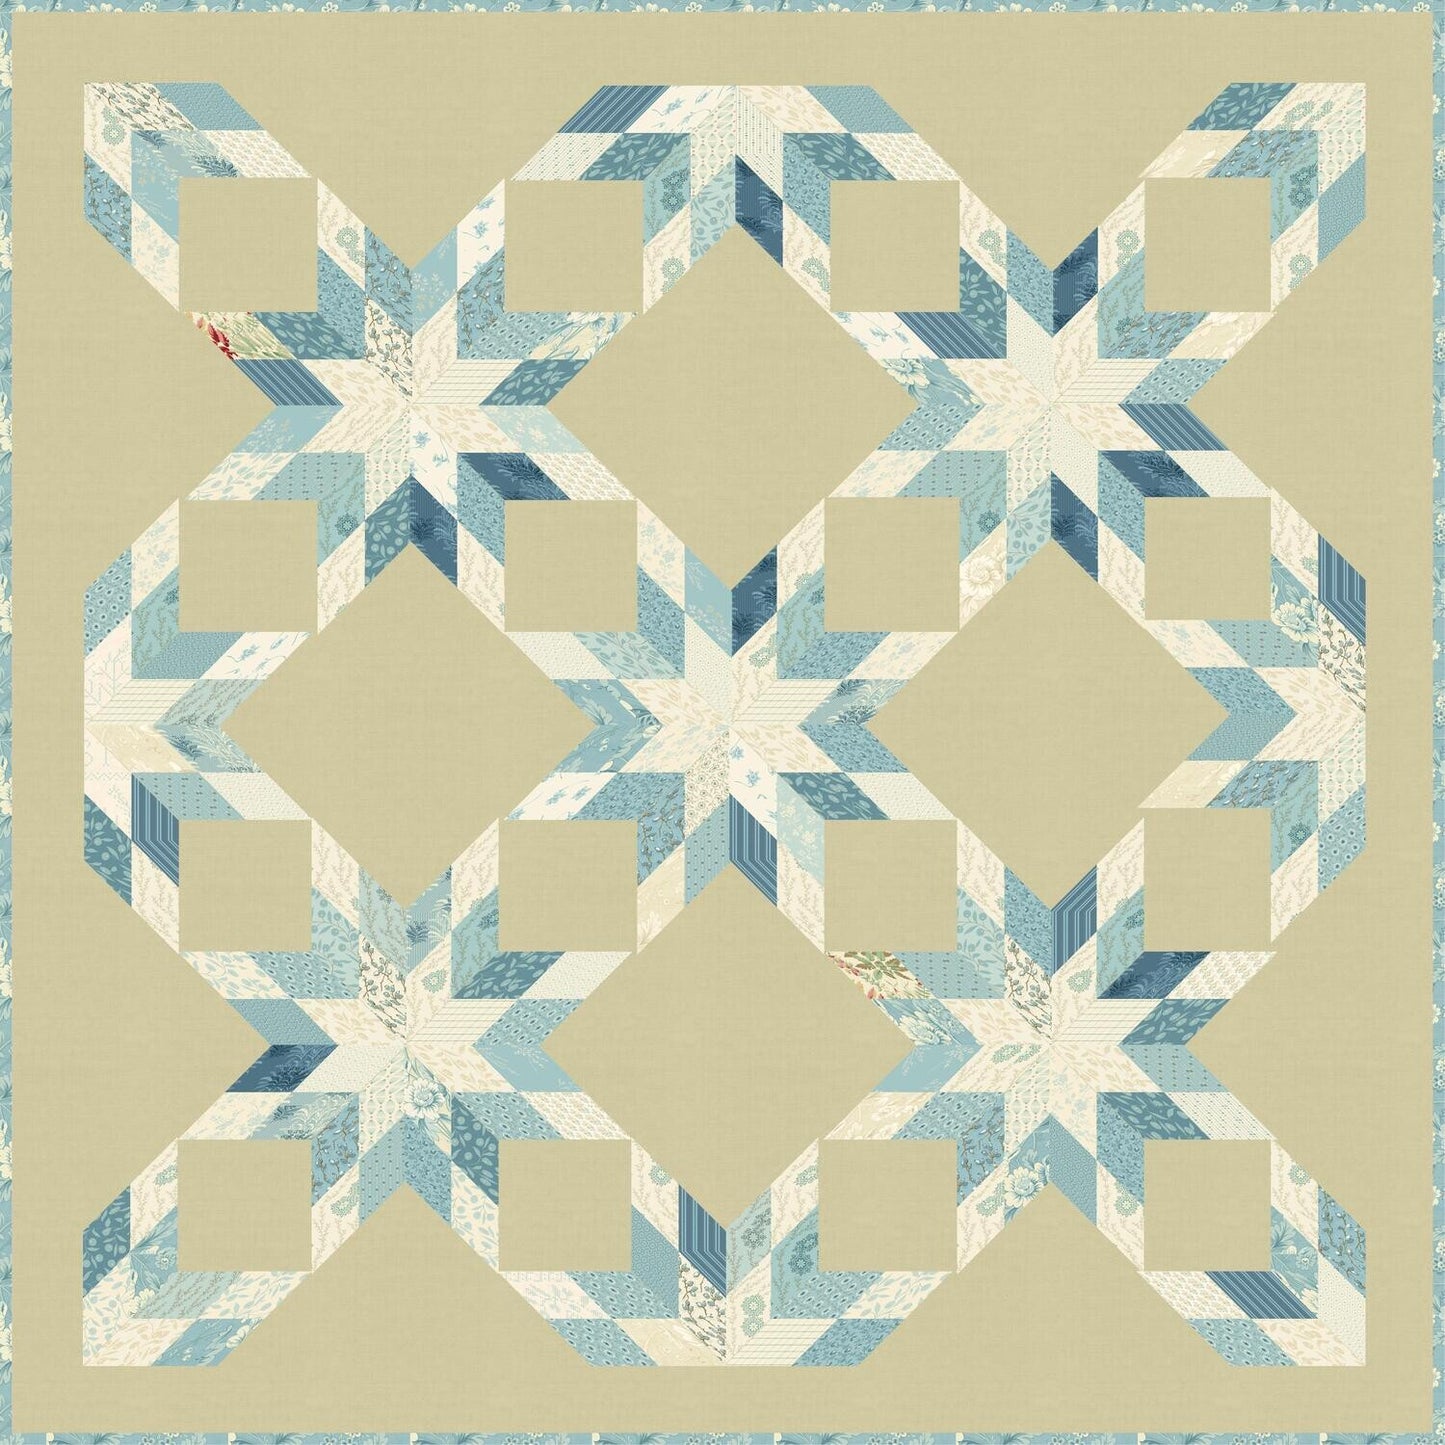 Lemoyne Star Quilt Pattern by Edyta Sitar of Laundry Basket Quilts